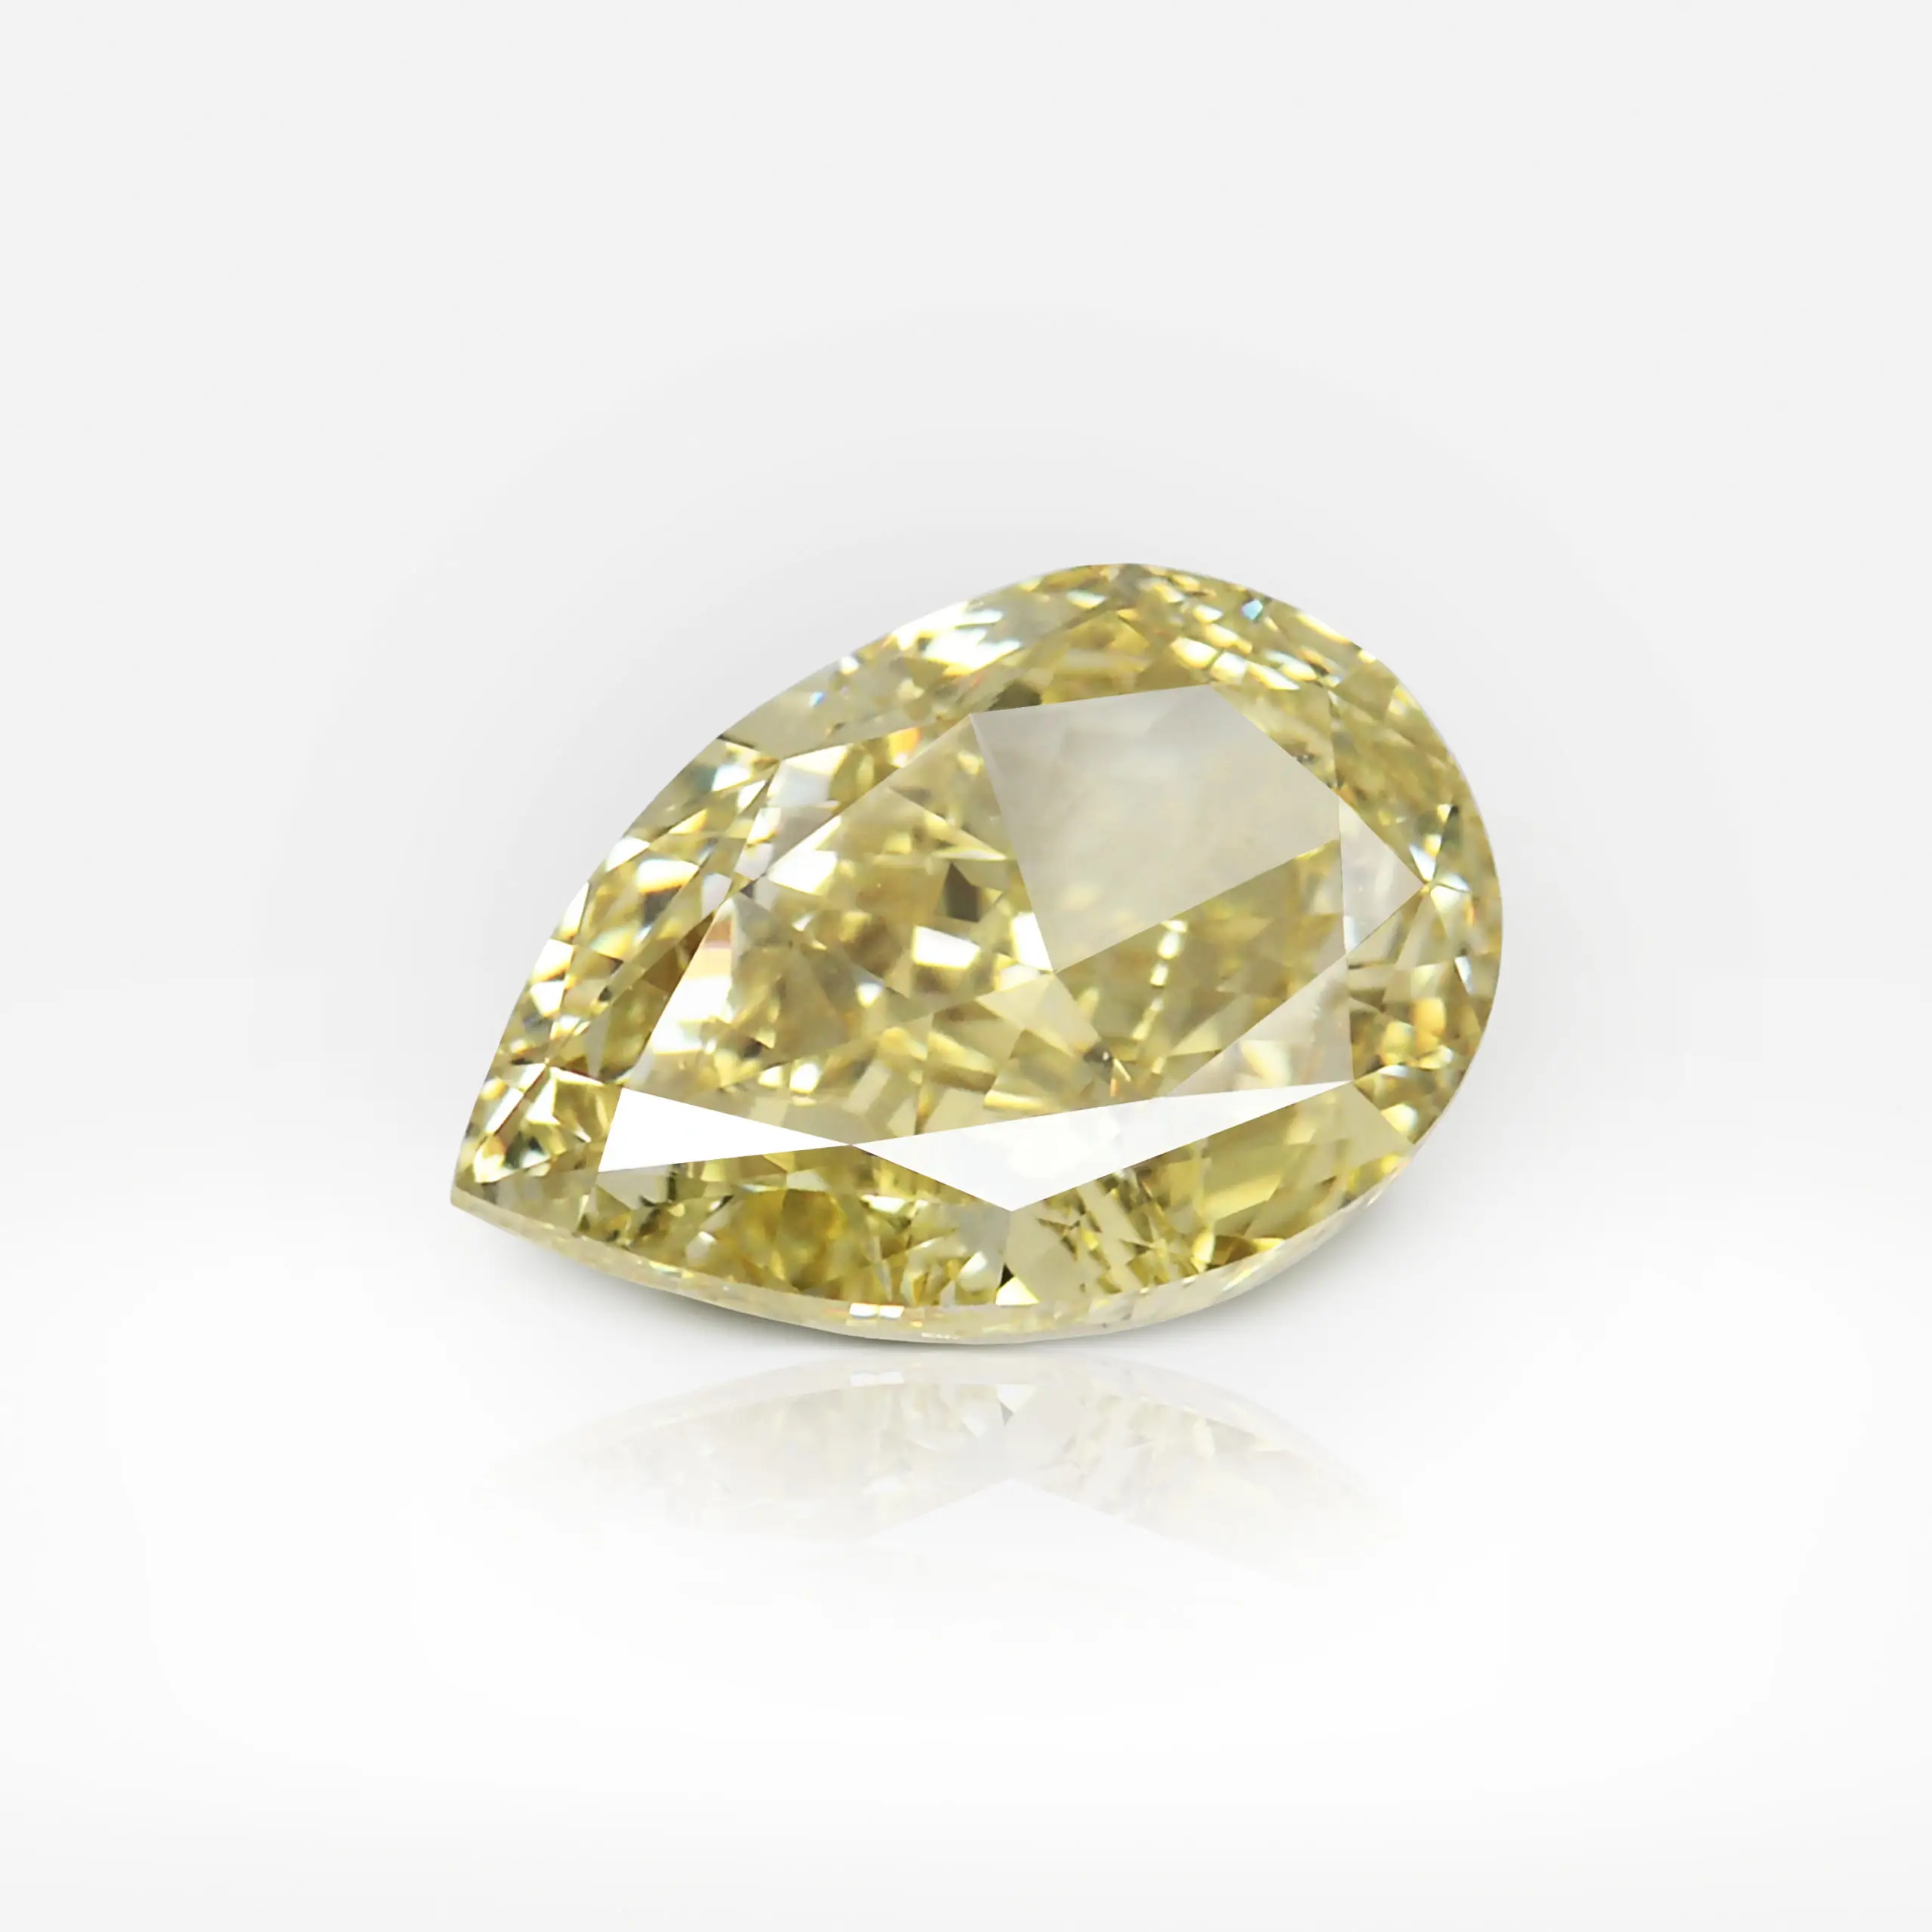 2.21 carat Fancy Intense Yellow VS1 Pear Shape Diamond GIA - picture 1